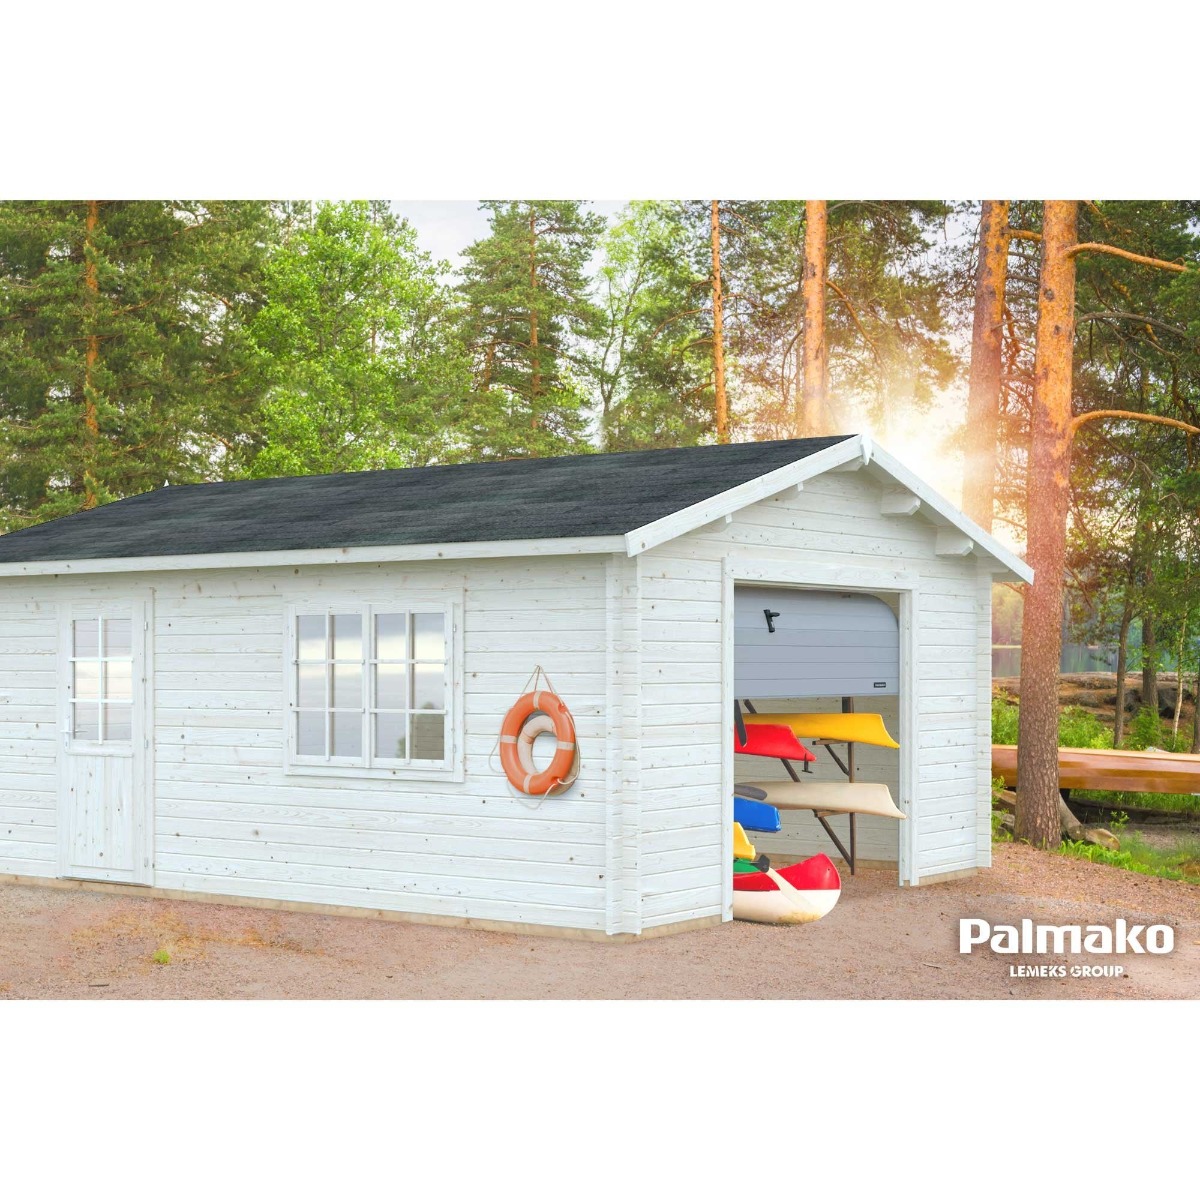 Palmako Roger 23.9m² Garage | Simply Log Cabins